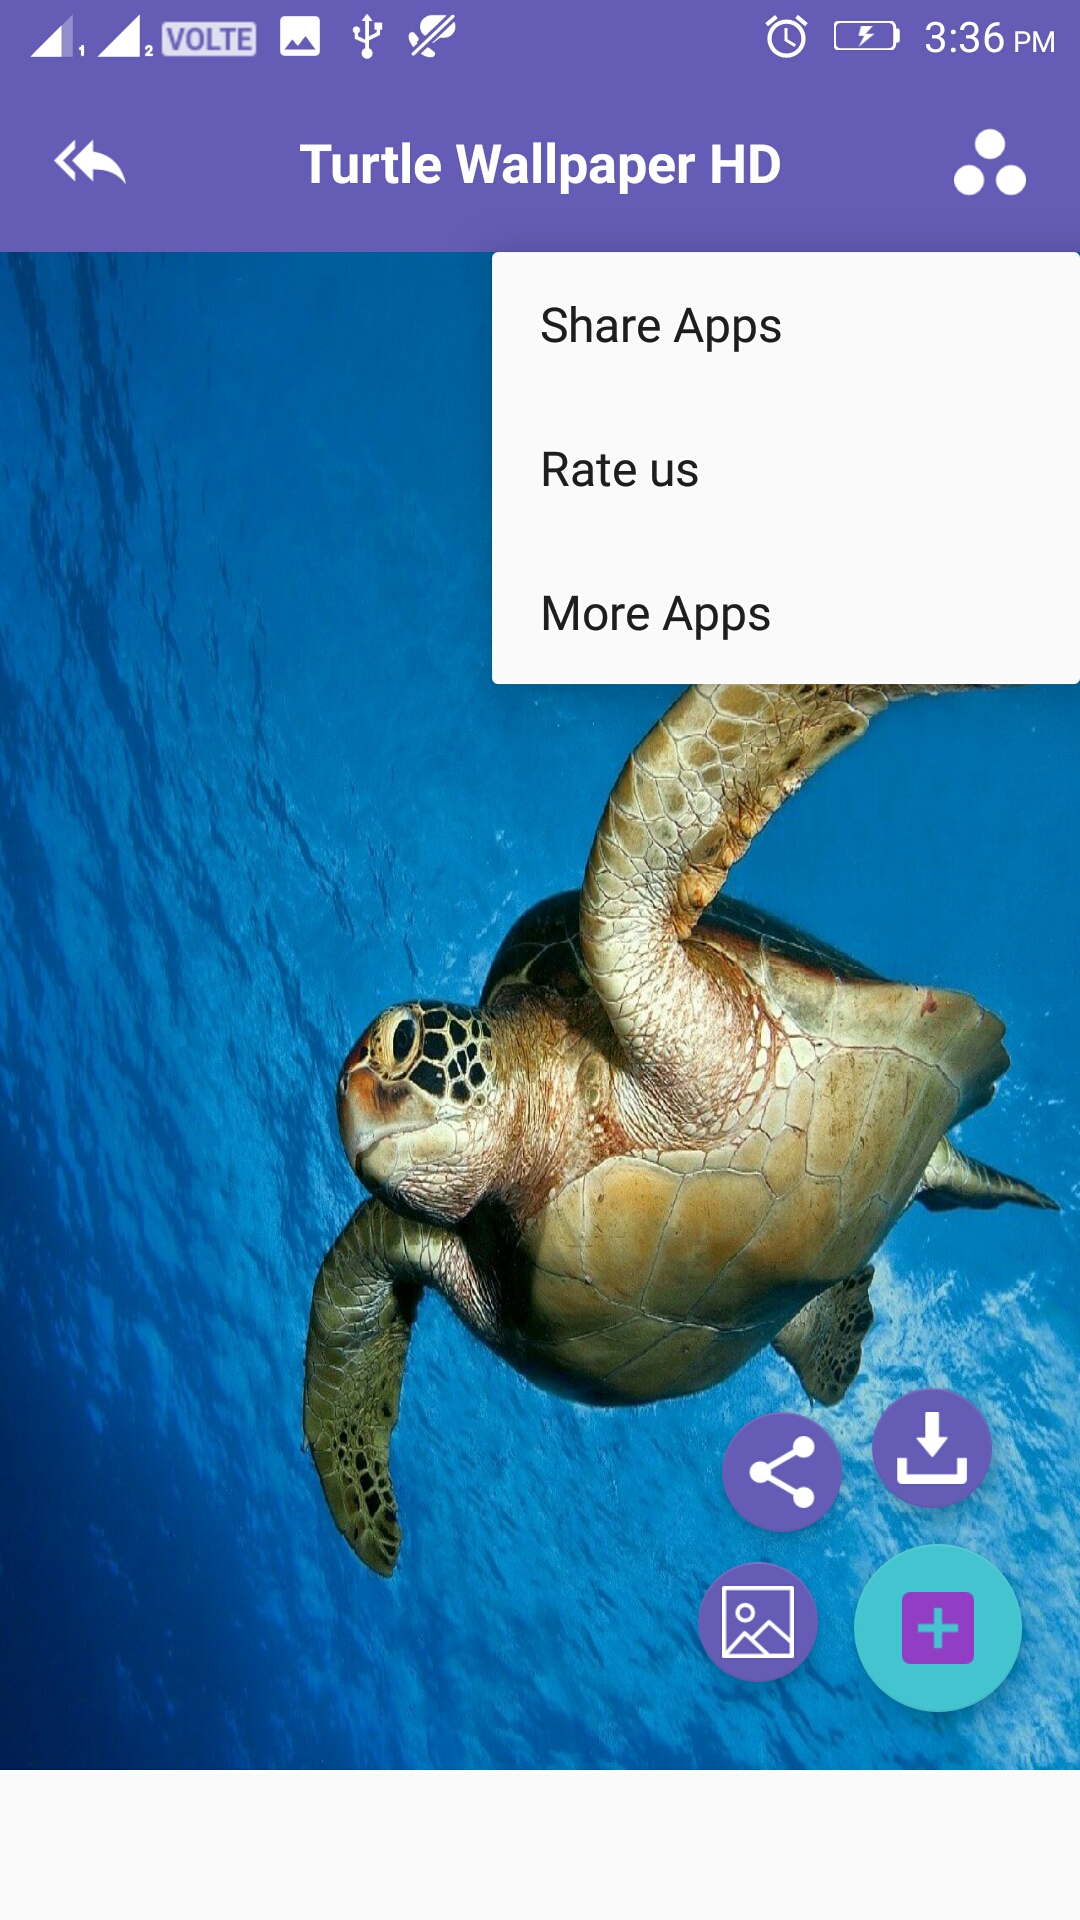 Android Phone Hd Wallpaper Bible Rates - HD Wallpaper 